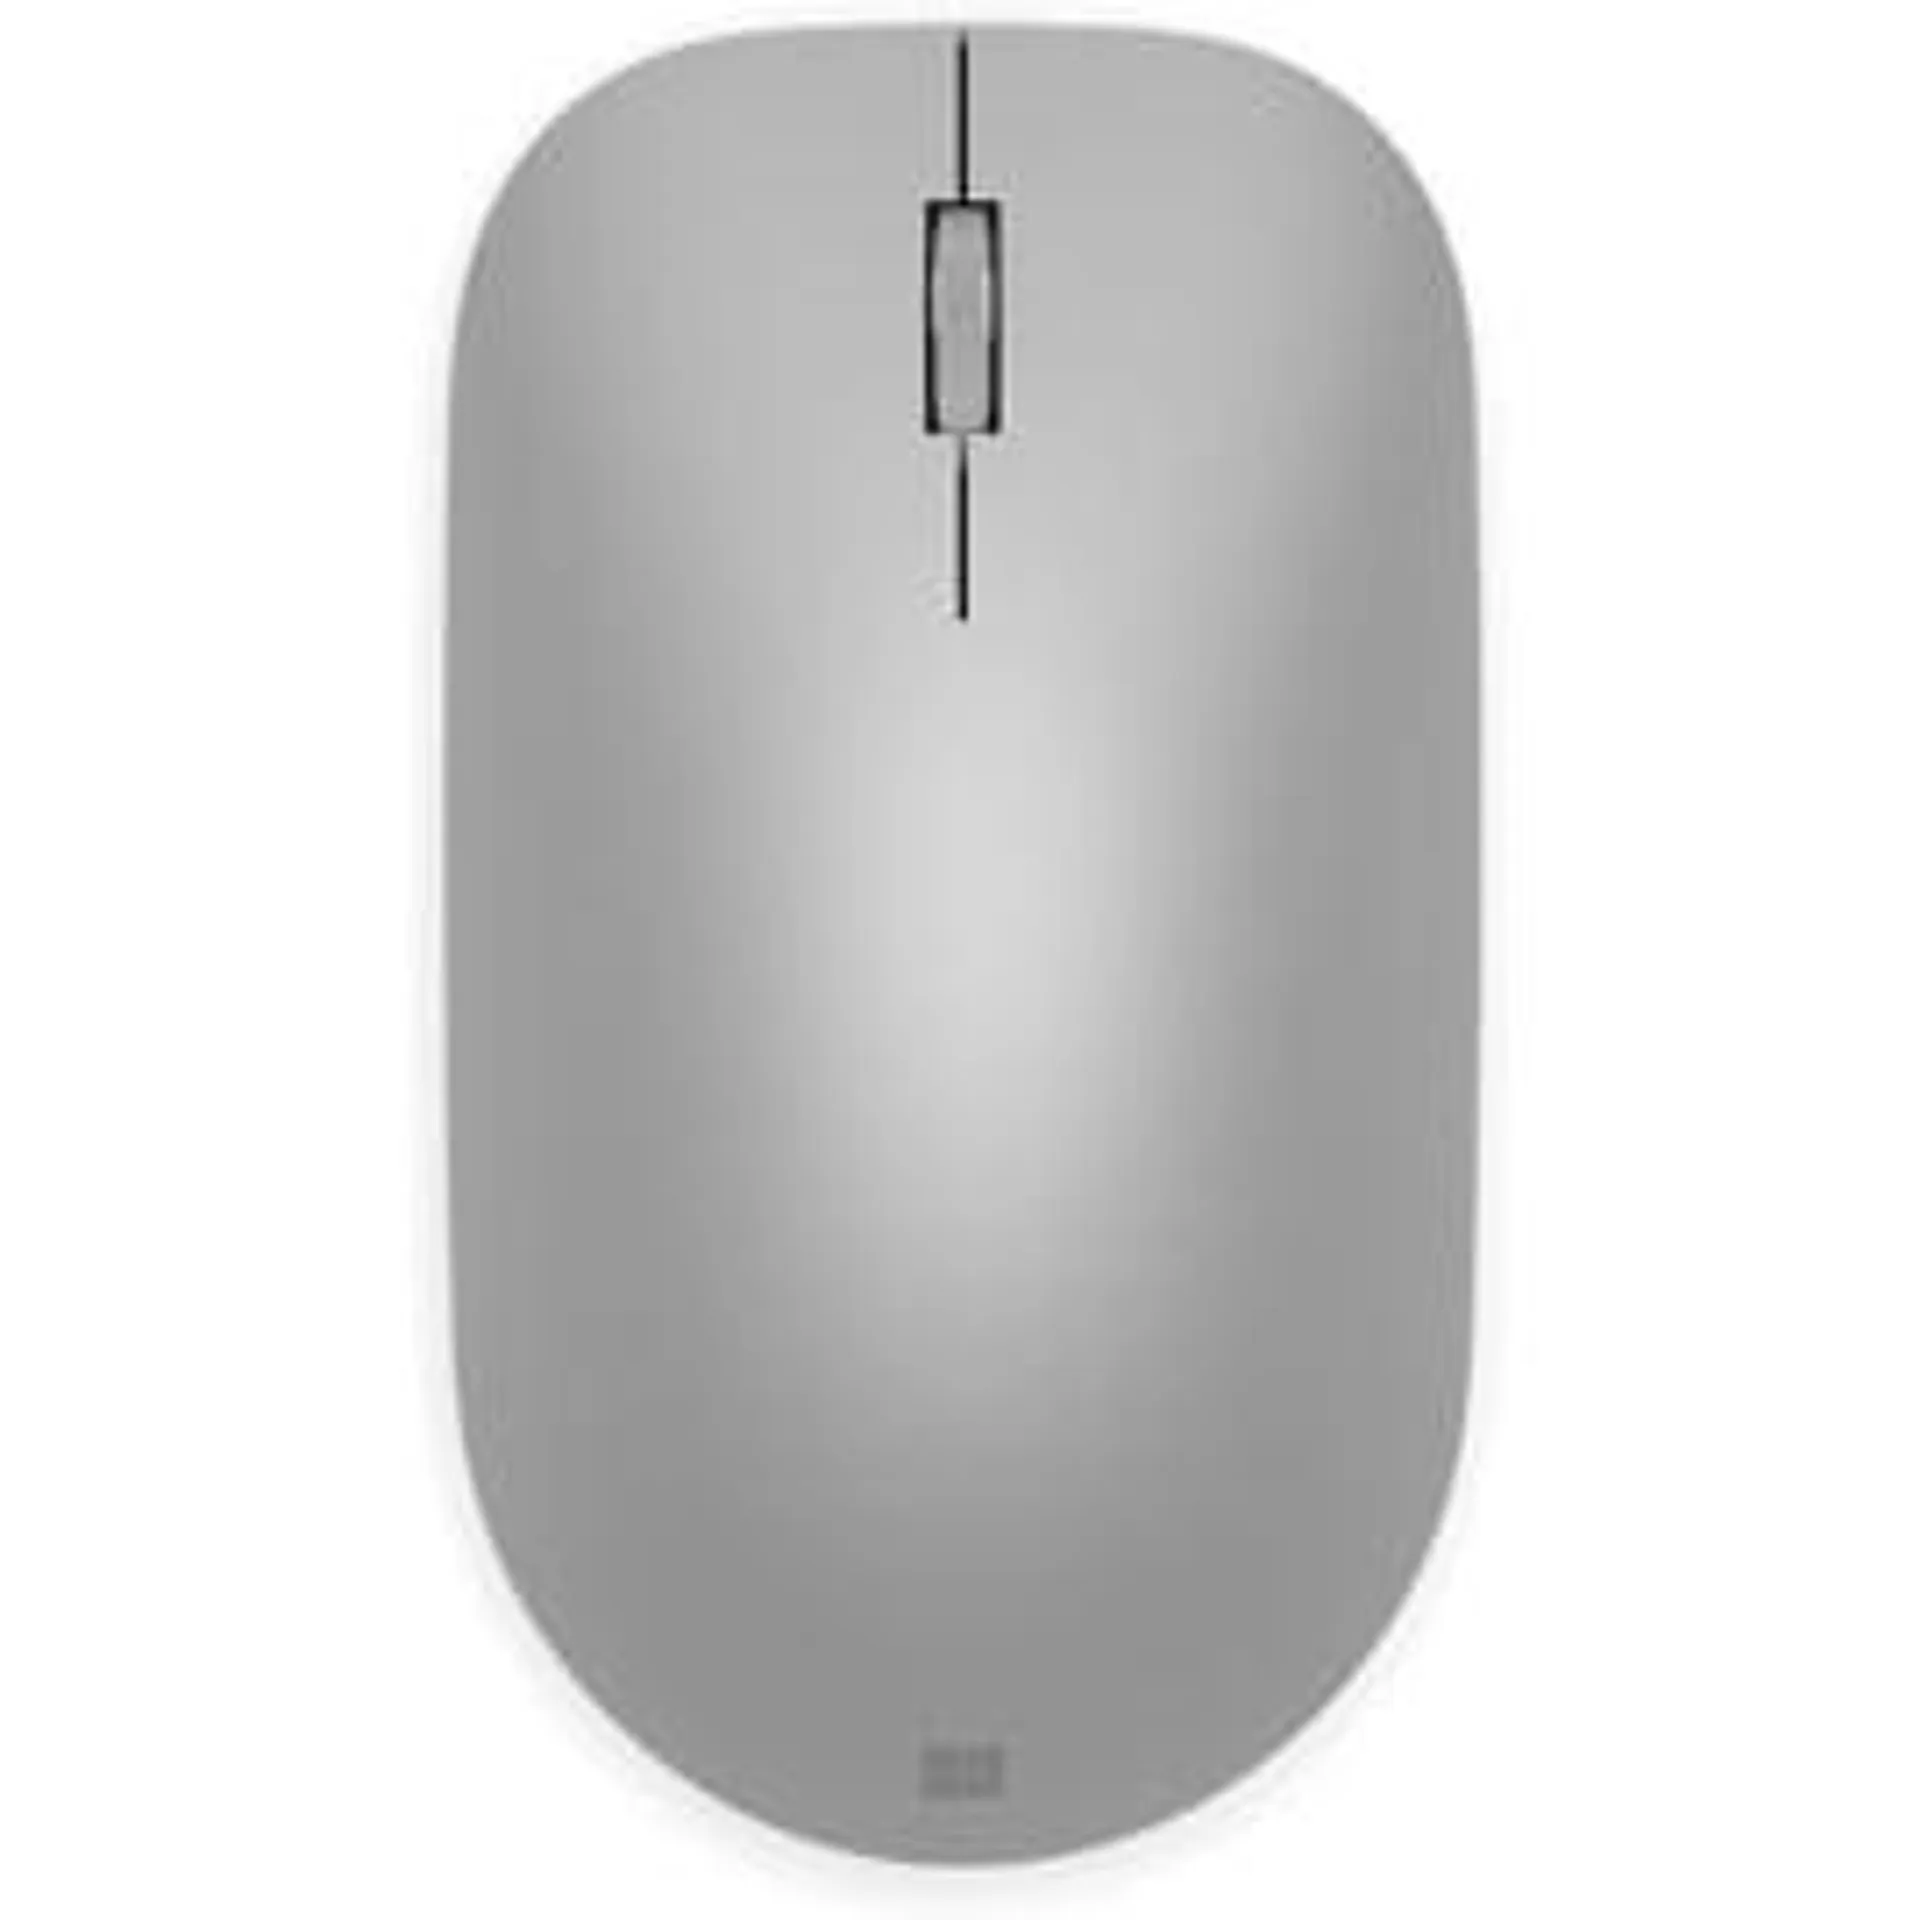 Microsoft Modern Mouse